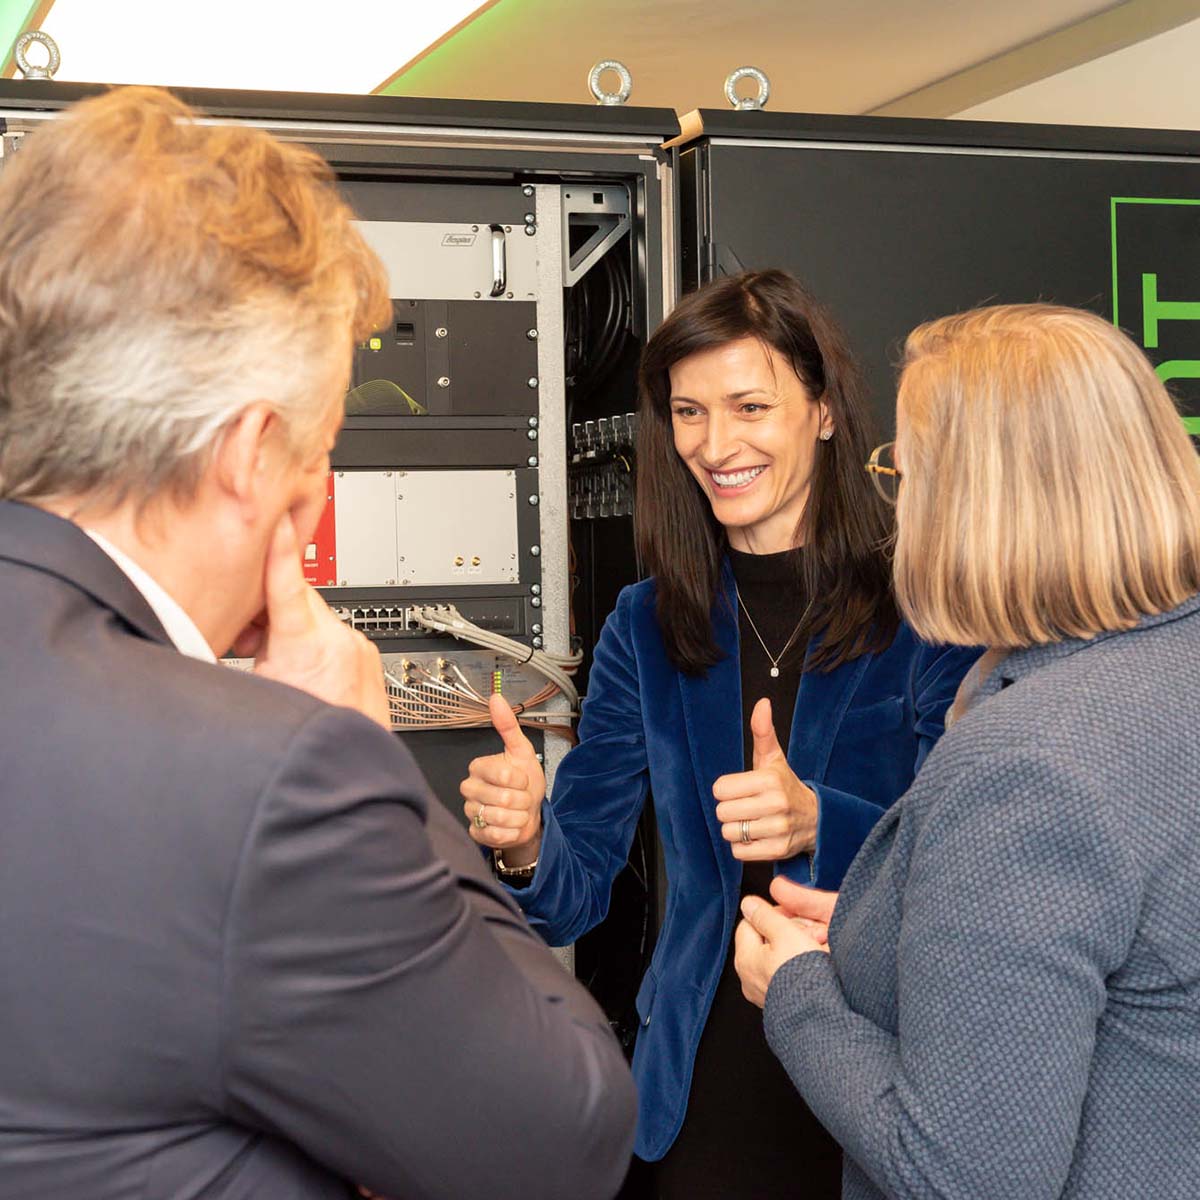 European Commissioner Mariya Gabriel visited AQT’s Experience Center in Innsbruck, Austria